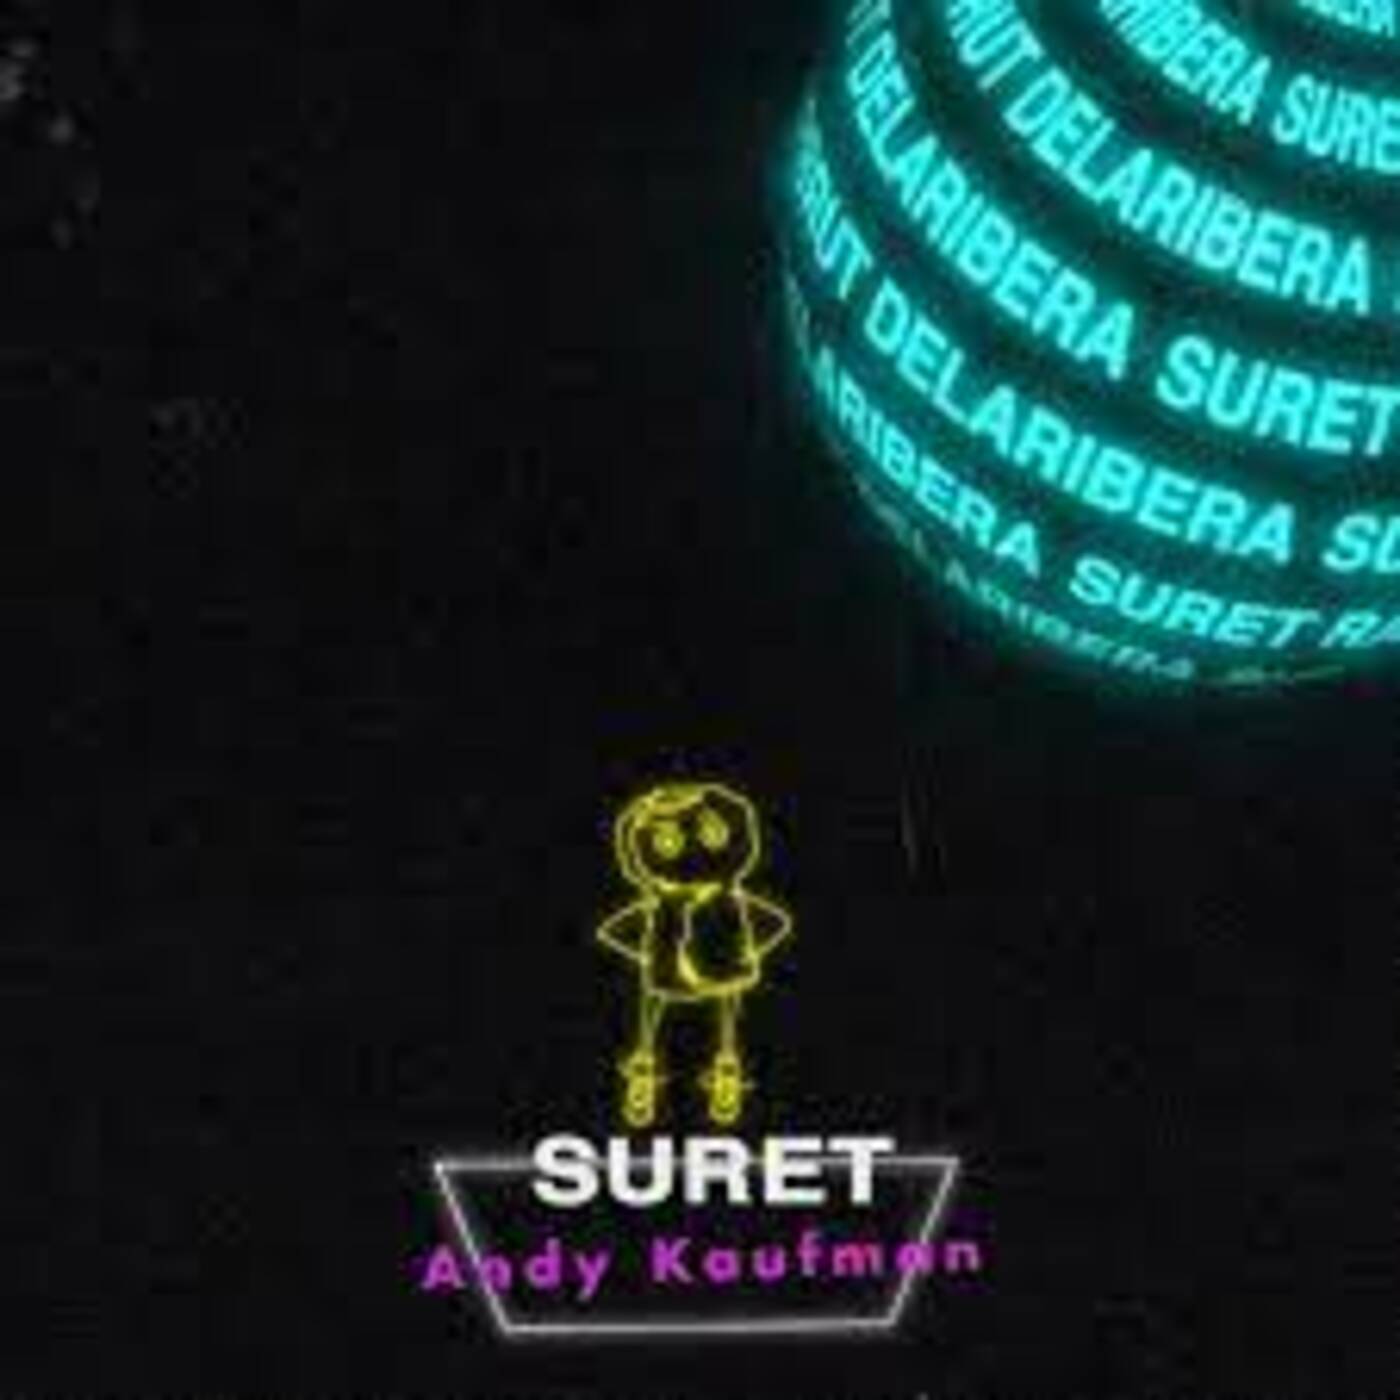 Suret - Andy Kaufman  | musica en valencià